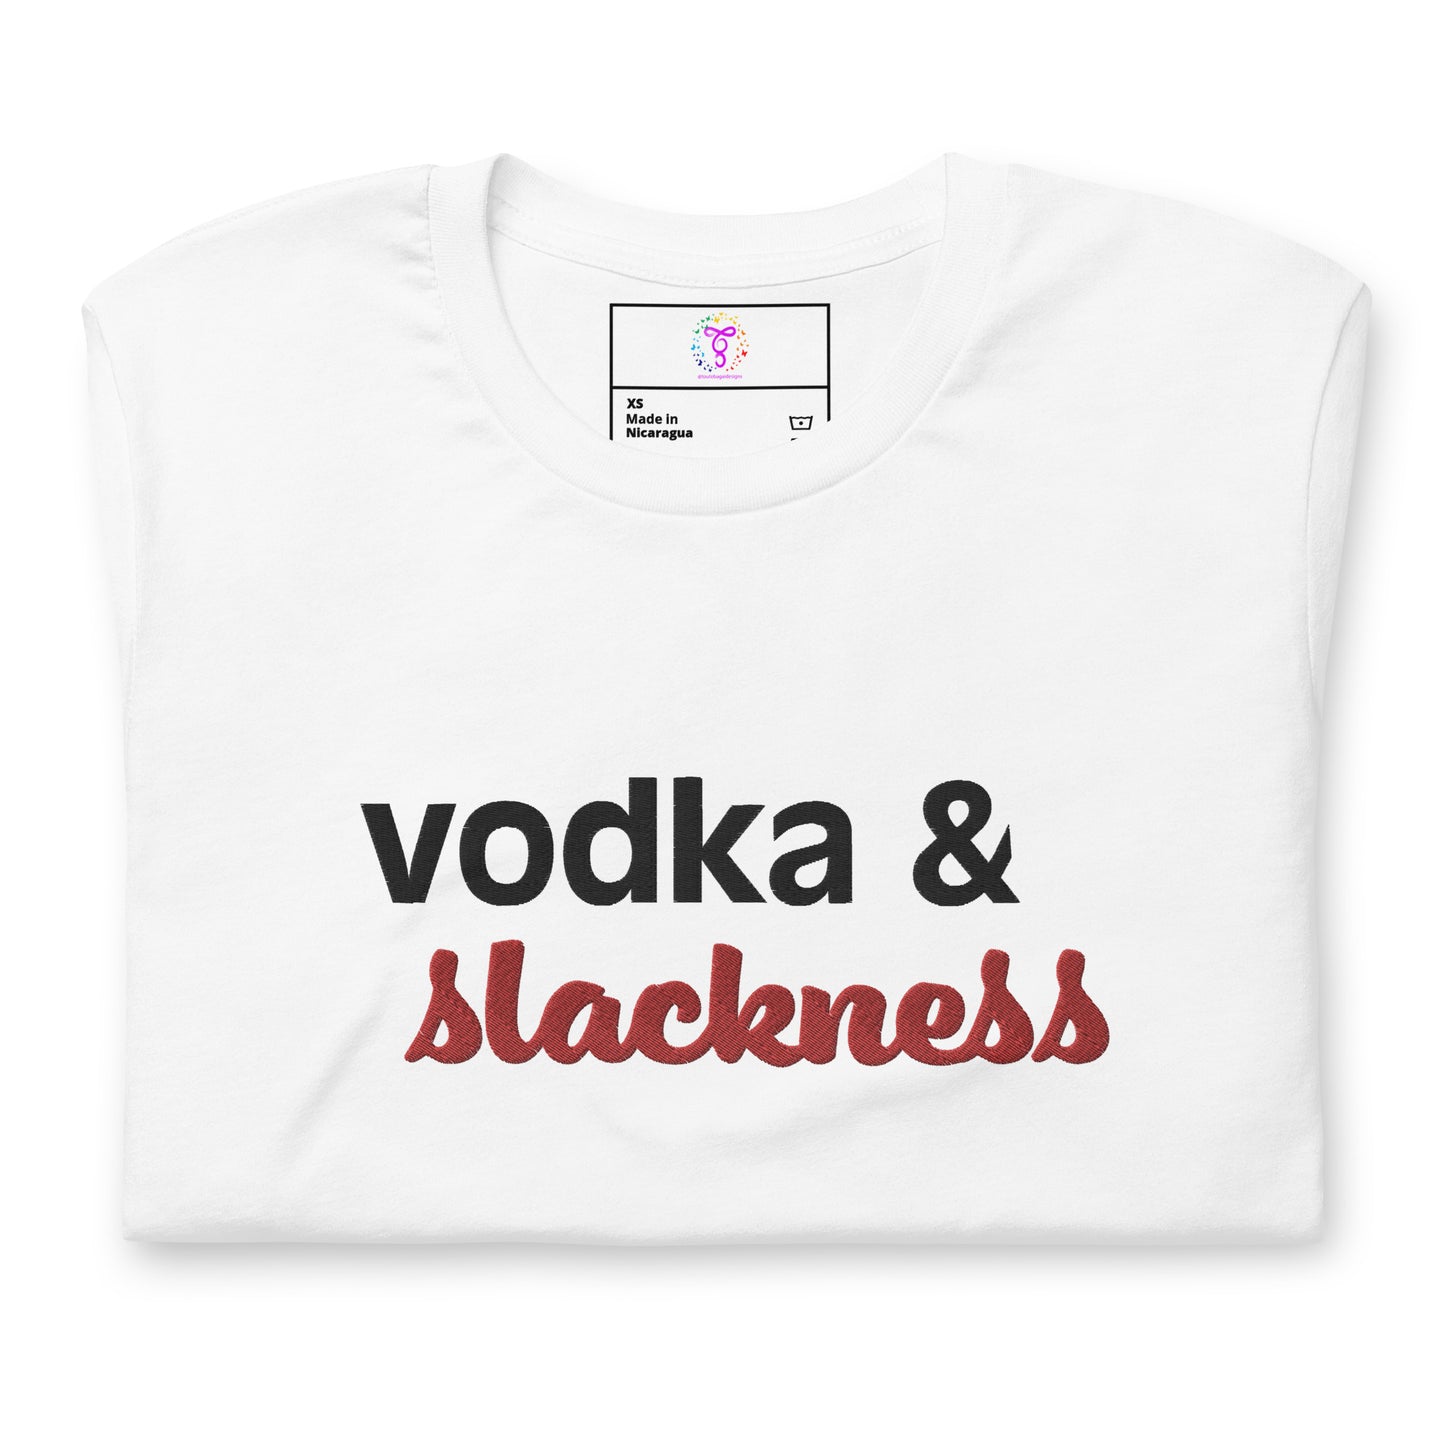 vodka & slackness Unisex t-shirt